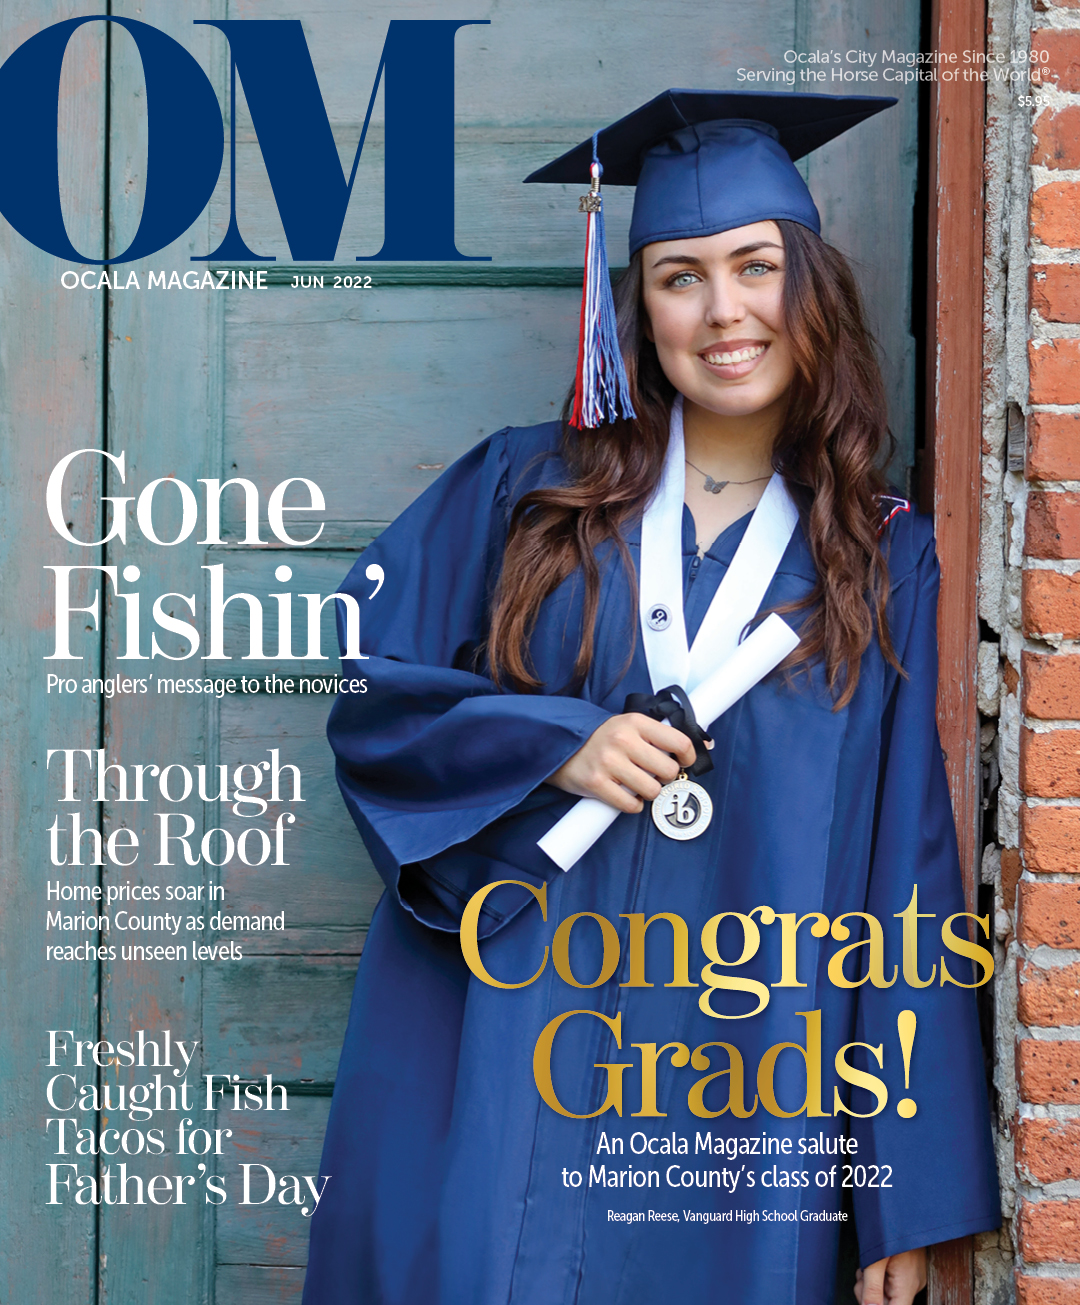 Ocala Magazine June 2022 cover